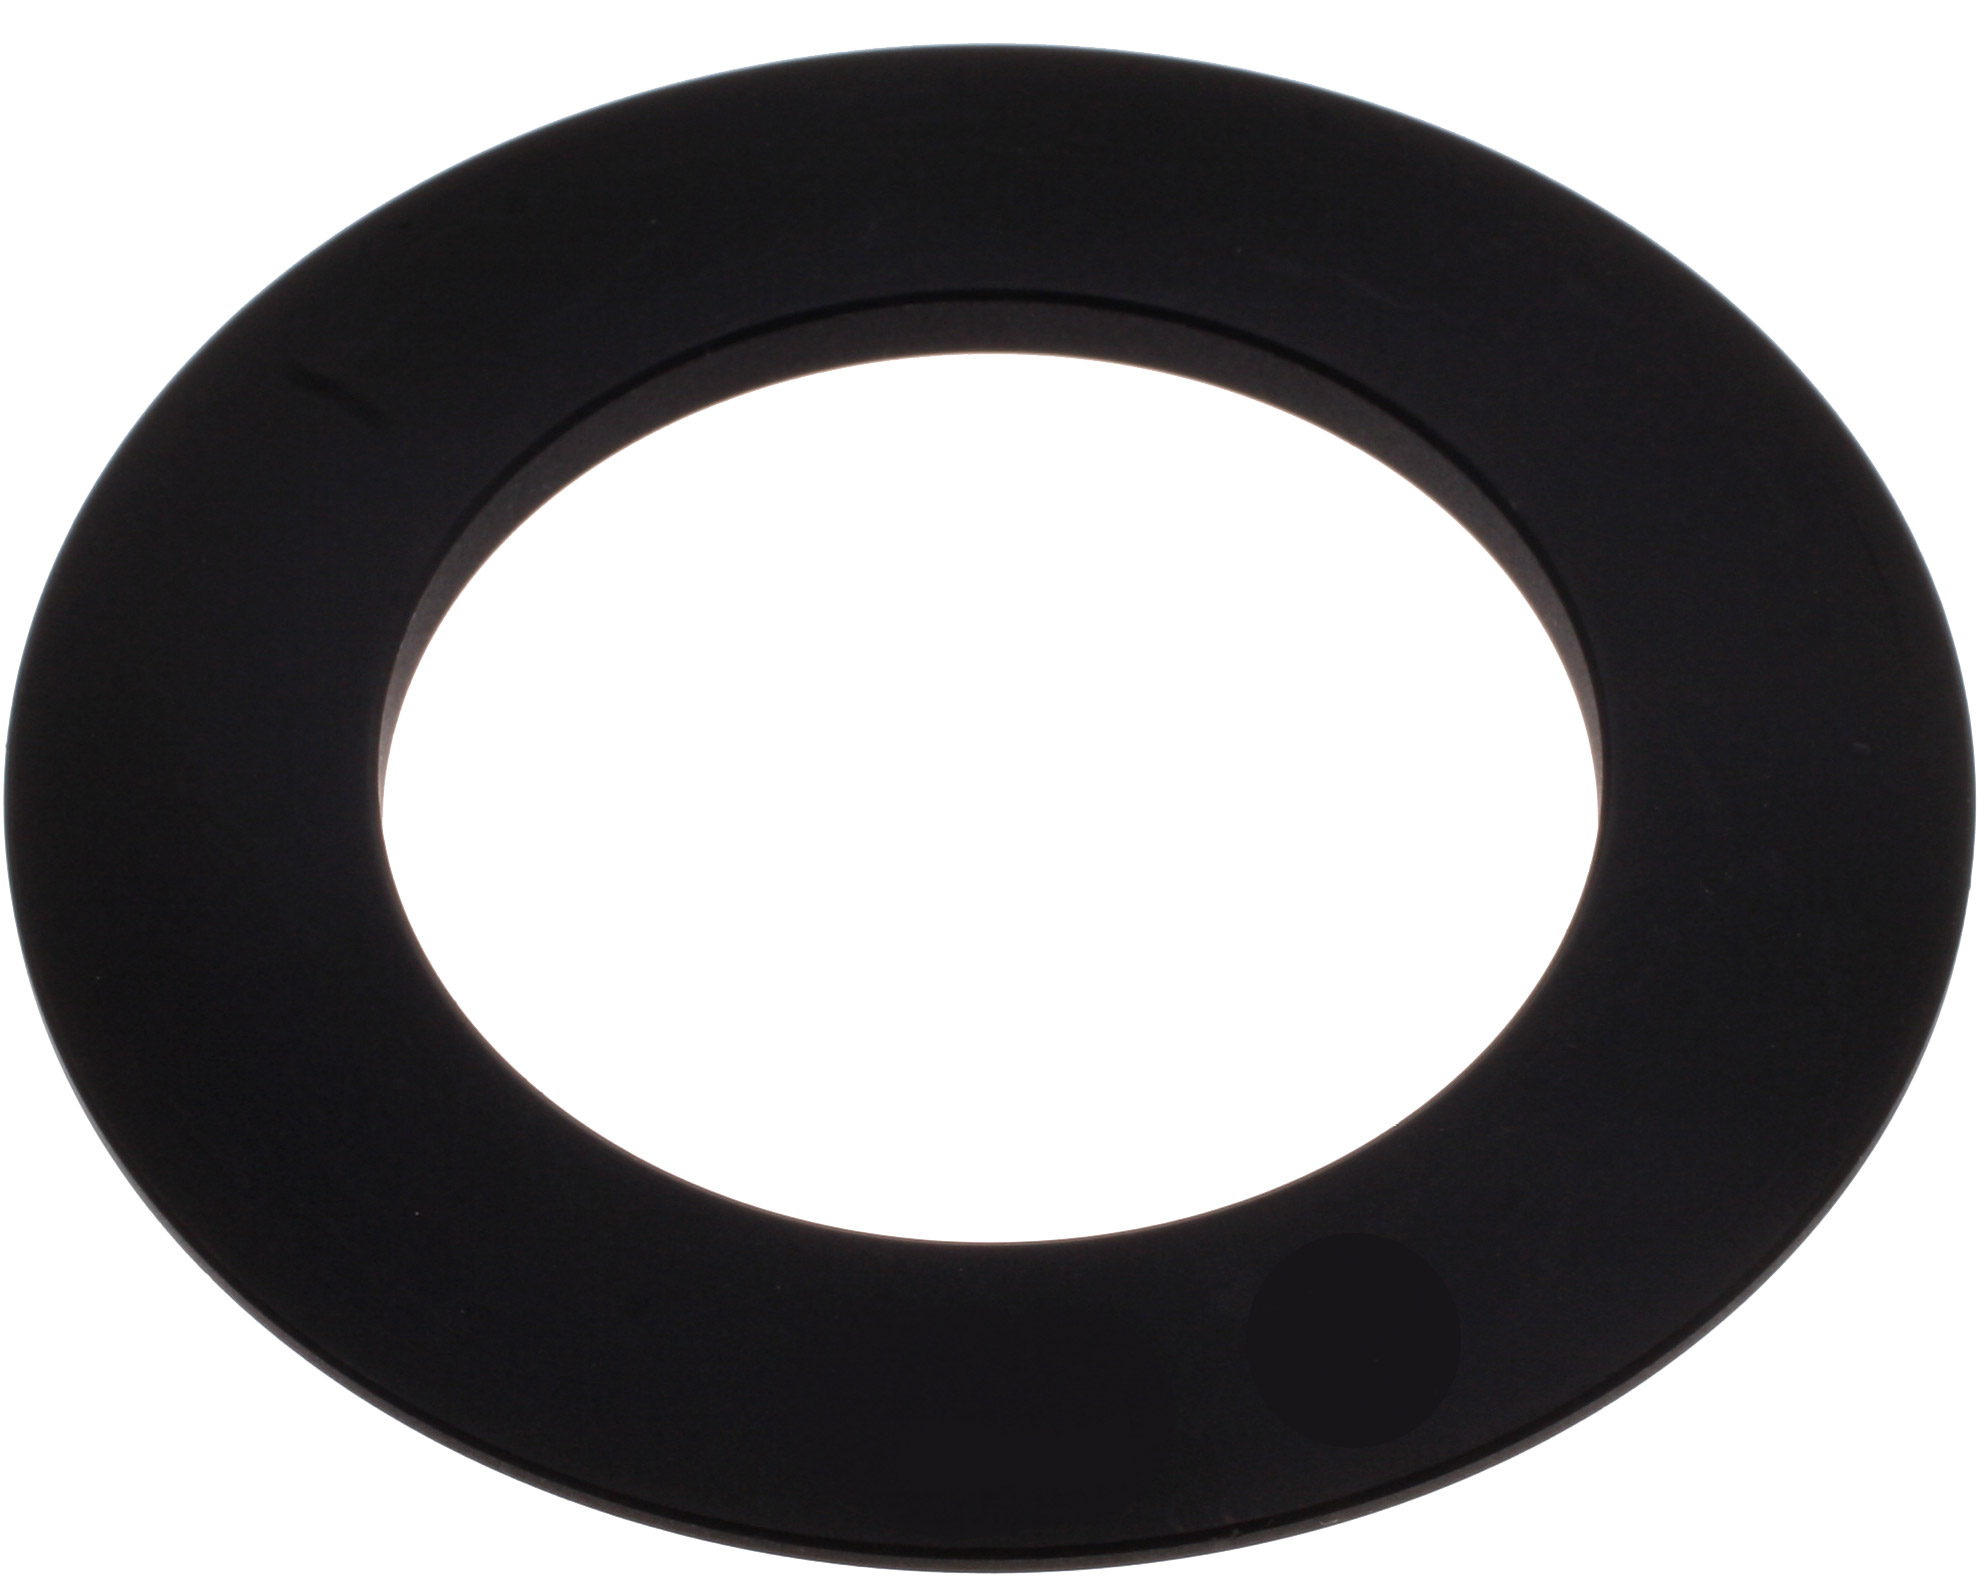 7dayshop Square Filter System - Metal Lens Adapter Ring - 58mm Fit